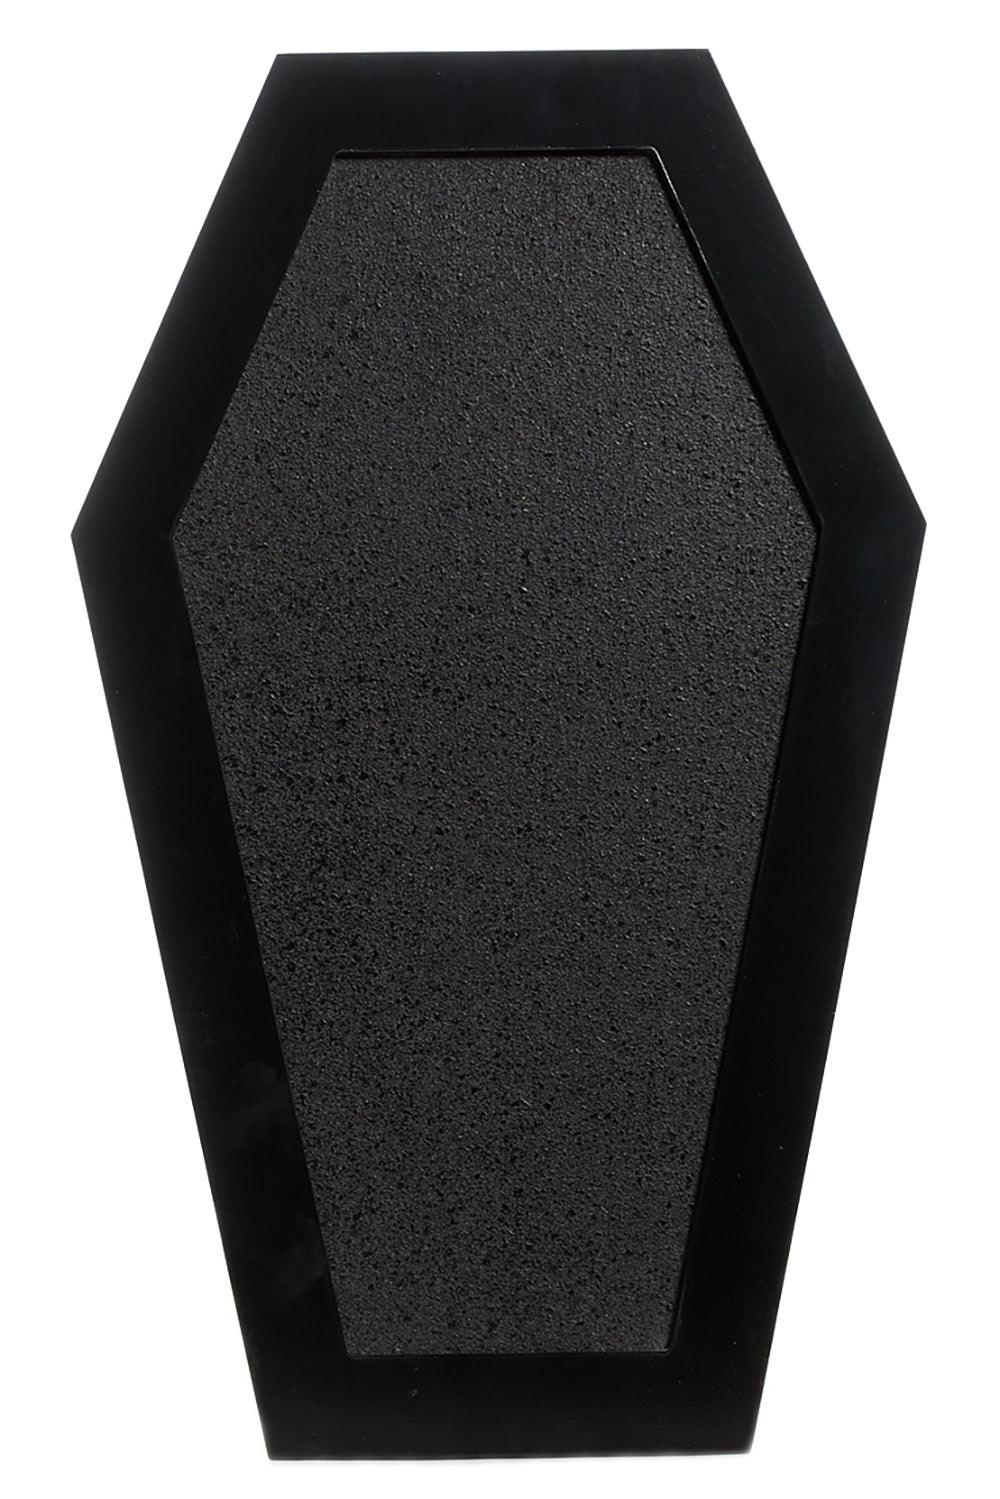 Sourpuss Coffin Cork Board - VampireFreaks